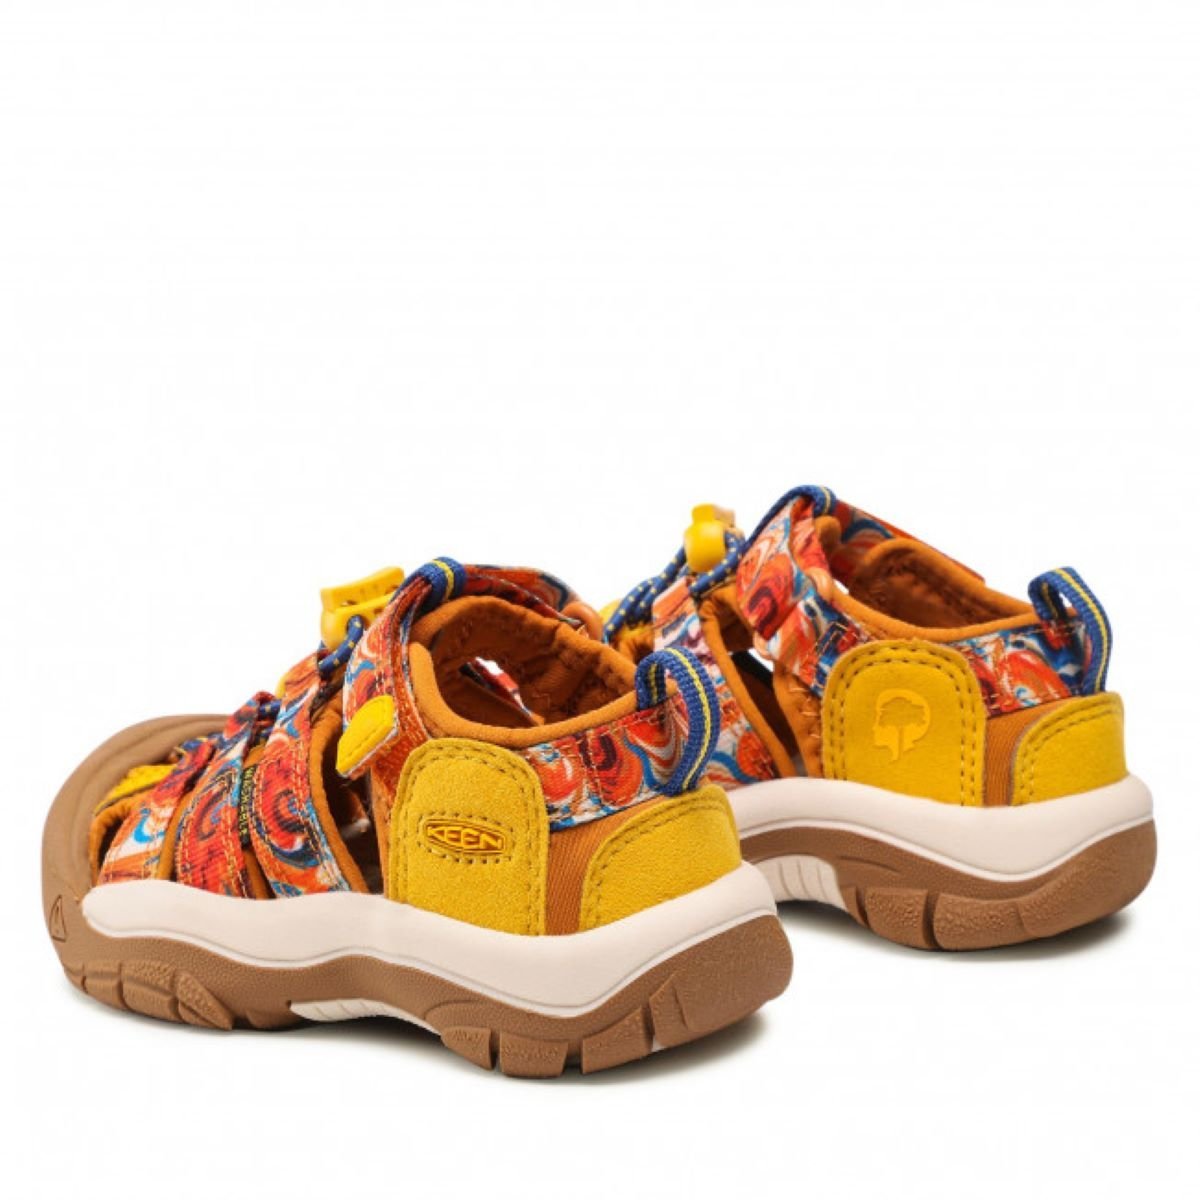 Взуття дитяче Keen Newport H2 J - помаранчеве/жовте